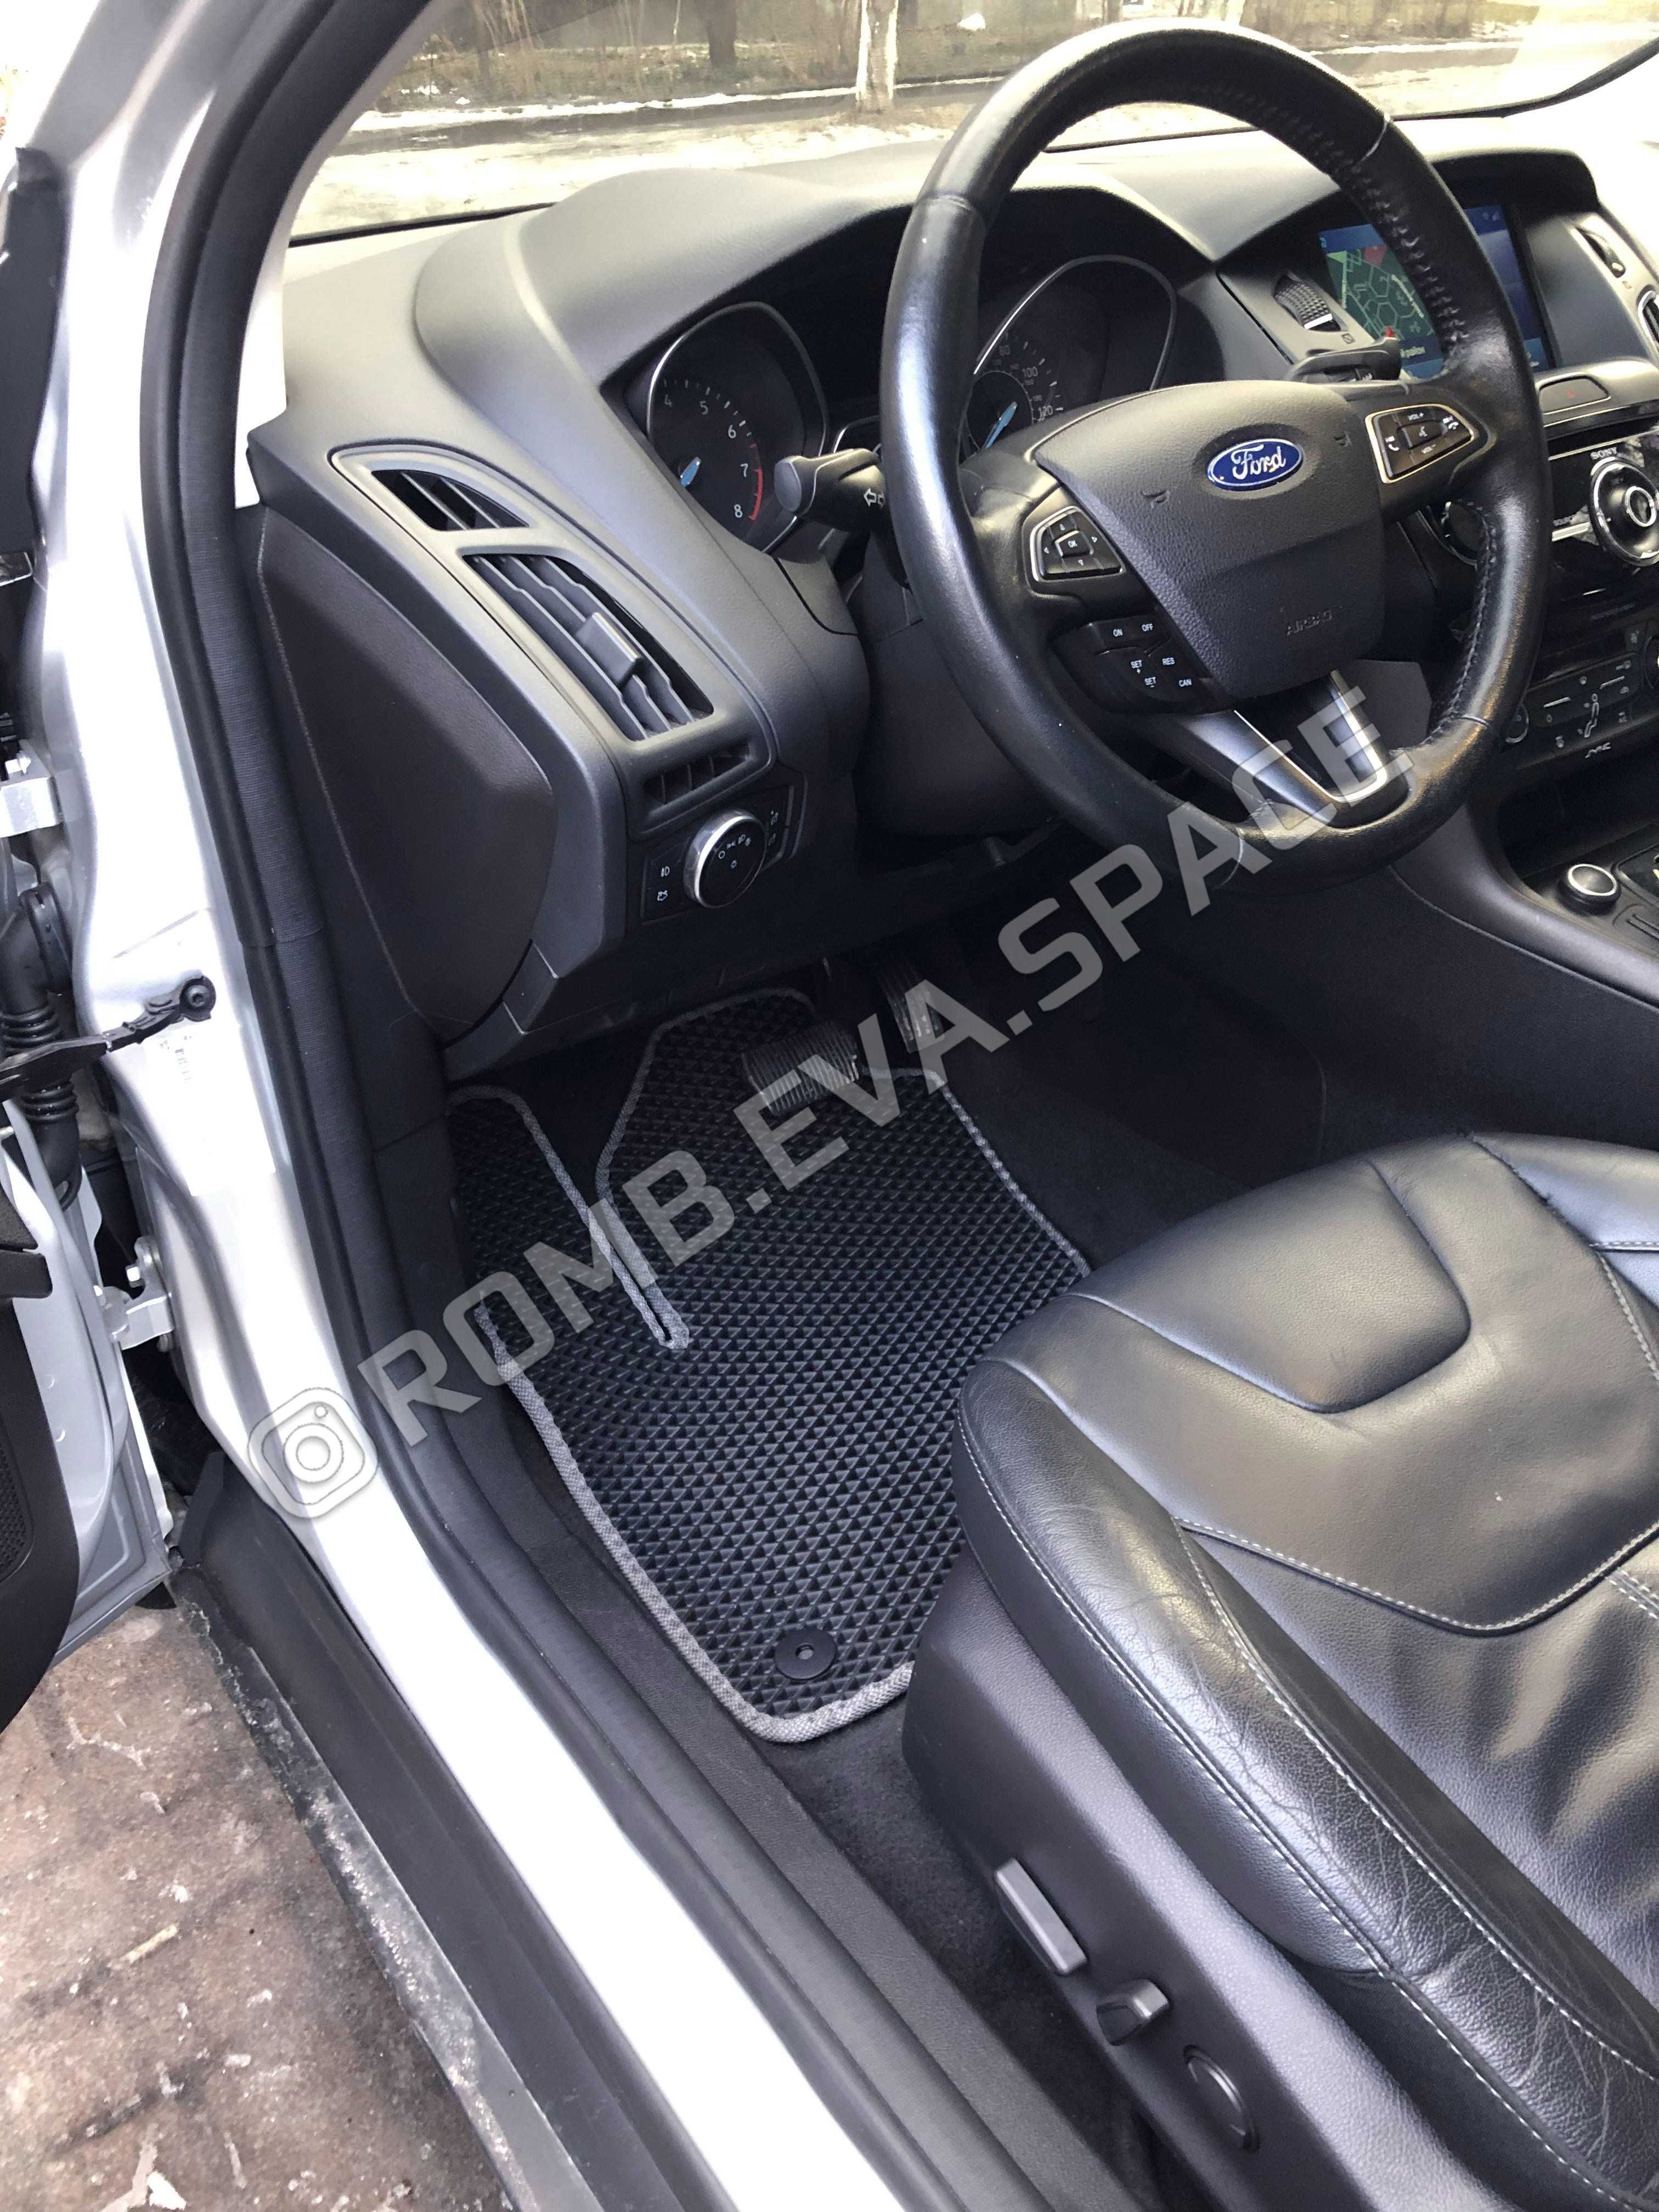 ЕВА EVA Коврики Ford Mondeo Focus Escape Transit Fusion Fiesta S C Max